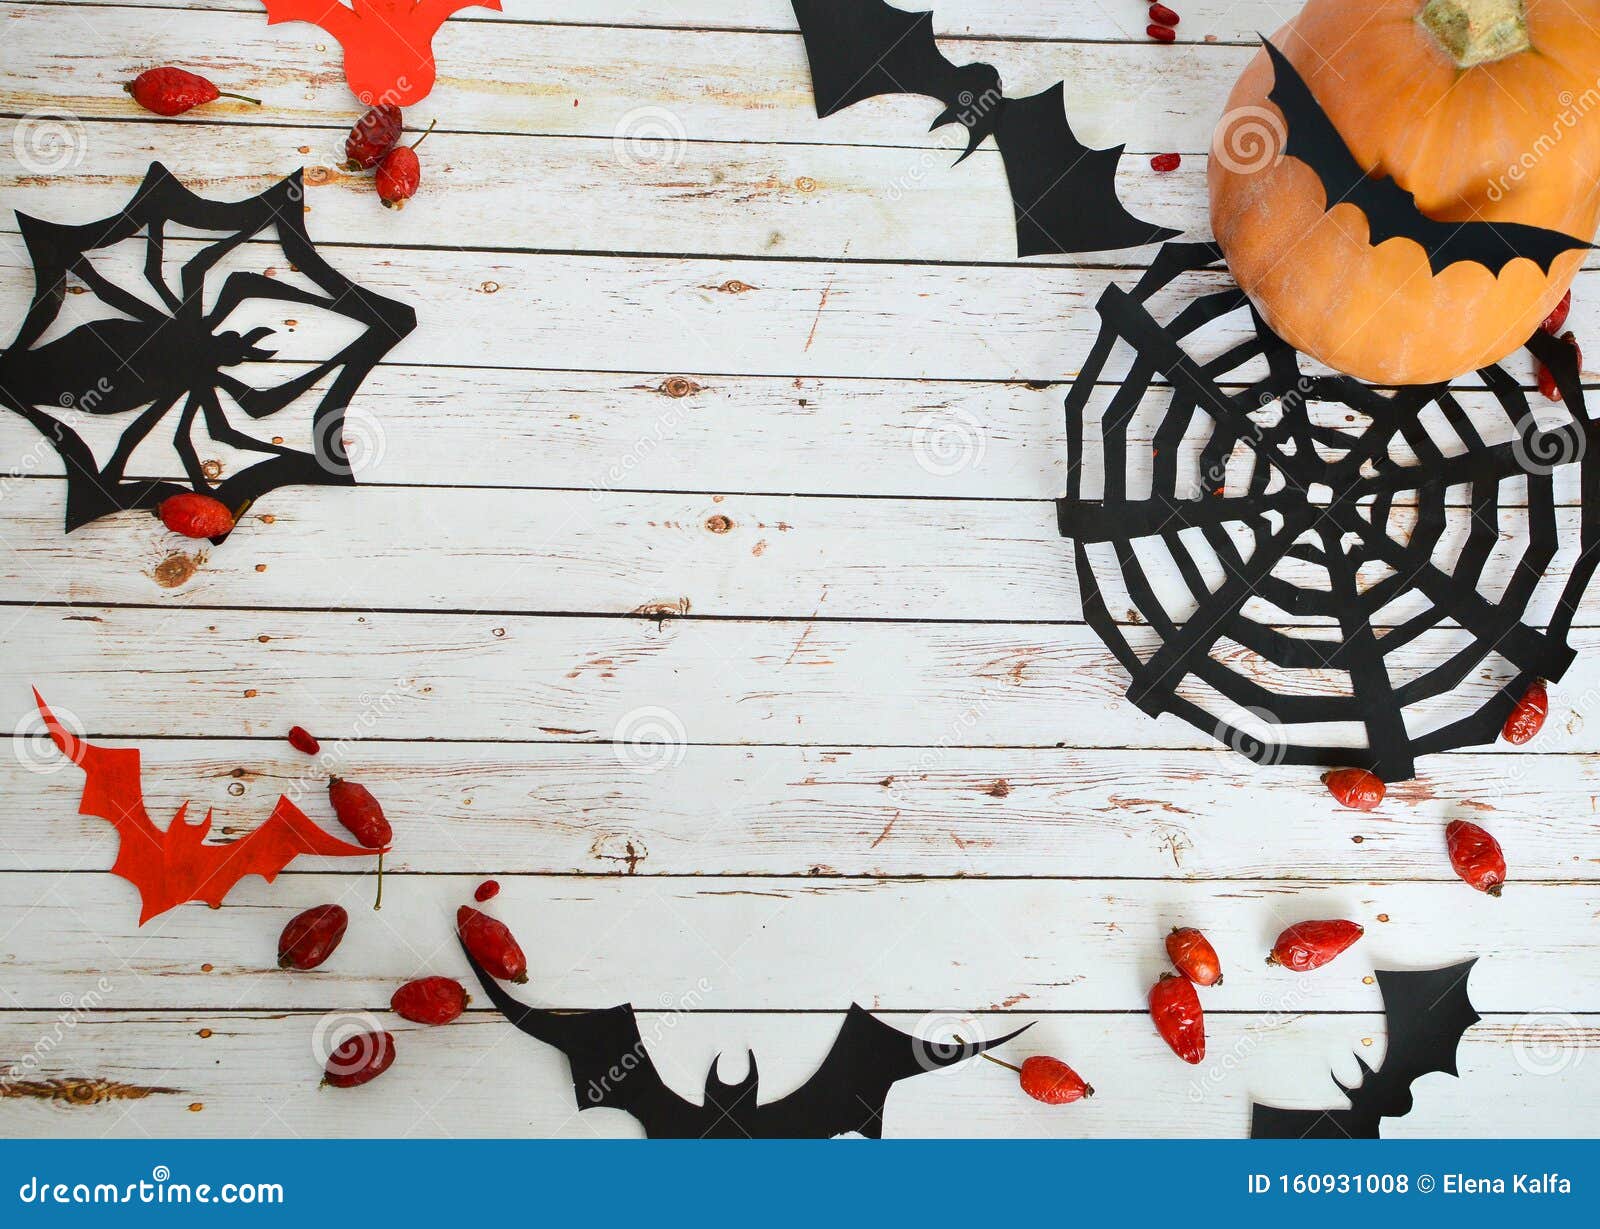 Halloween Decorations on a White Wooden Background: Pumpkin ...